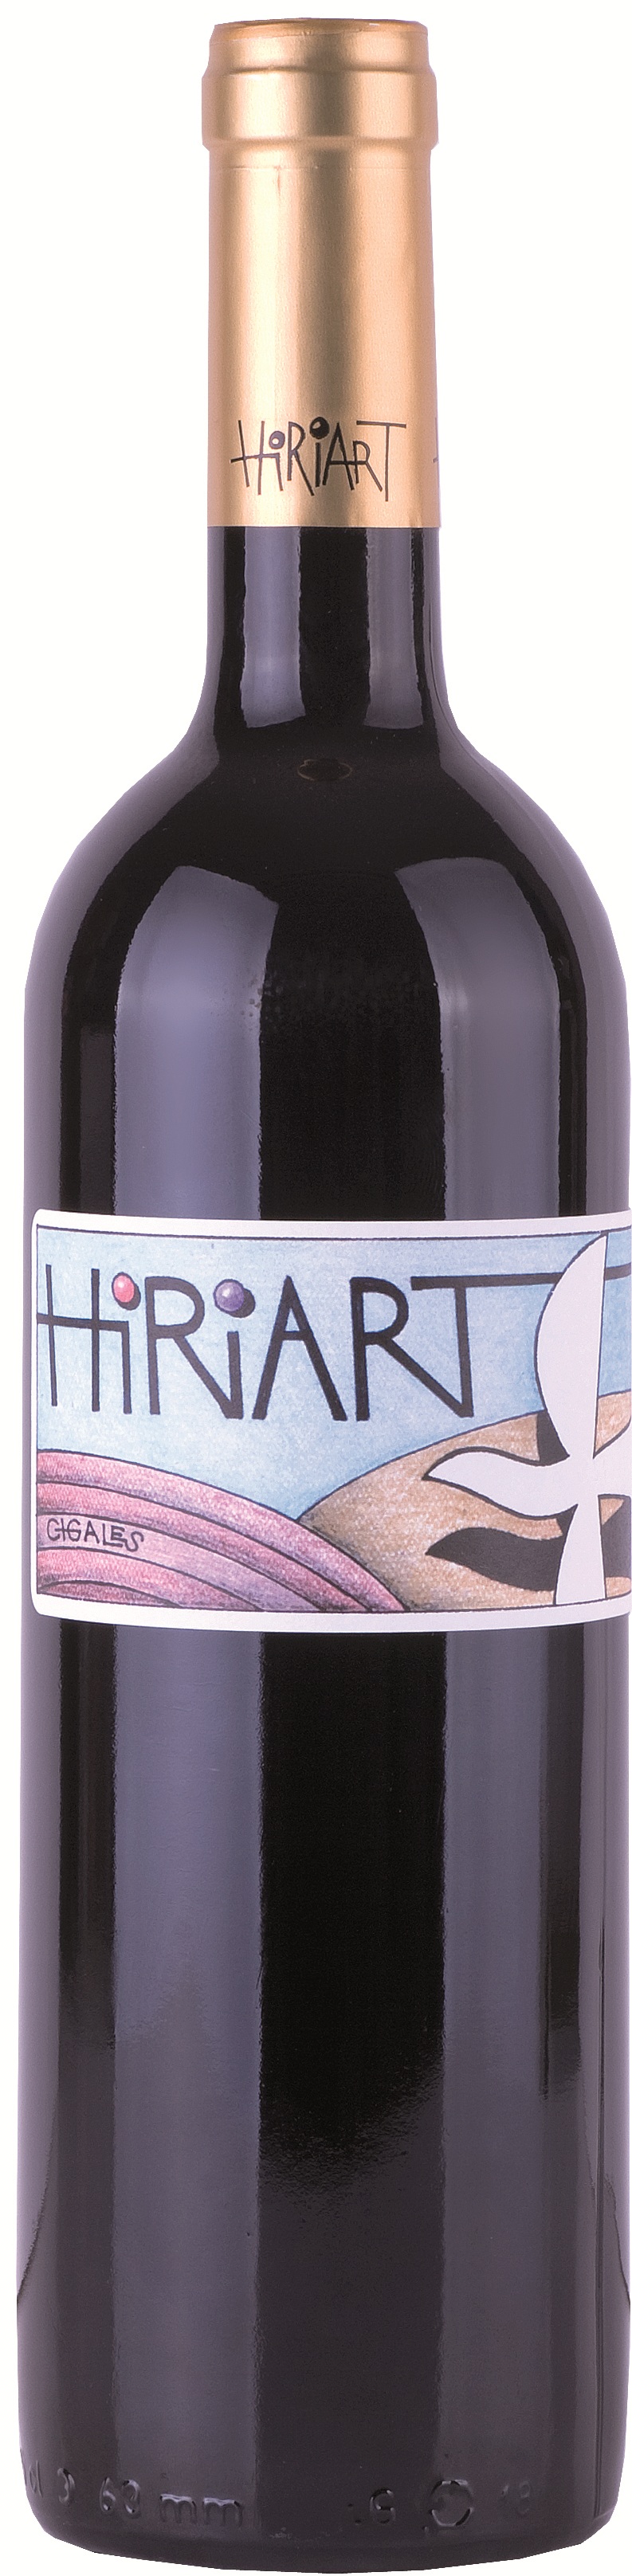 Image of Wine bottle Hiriart Tinto Crianza